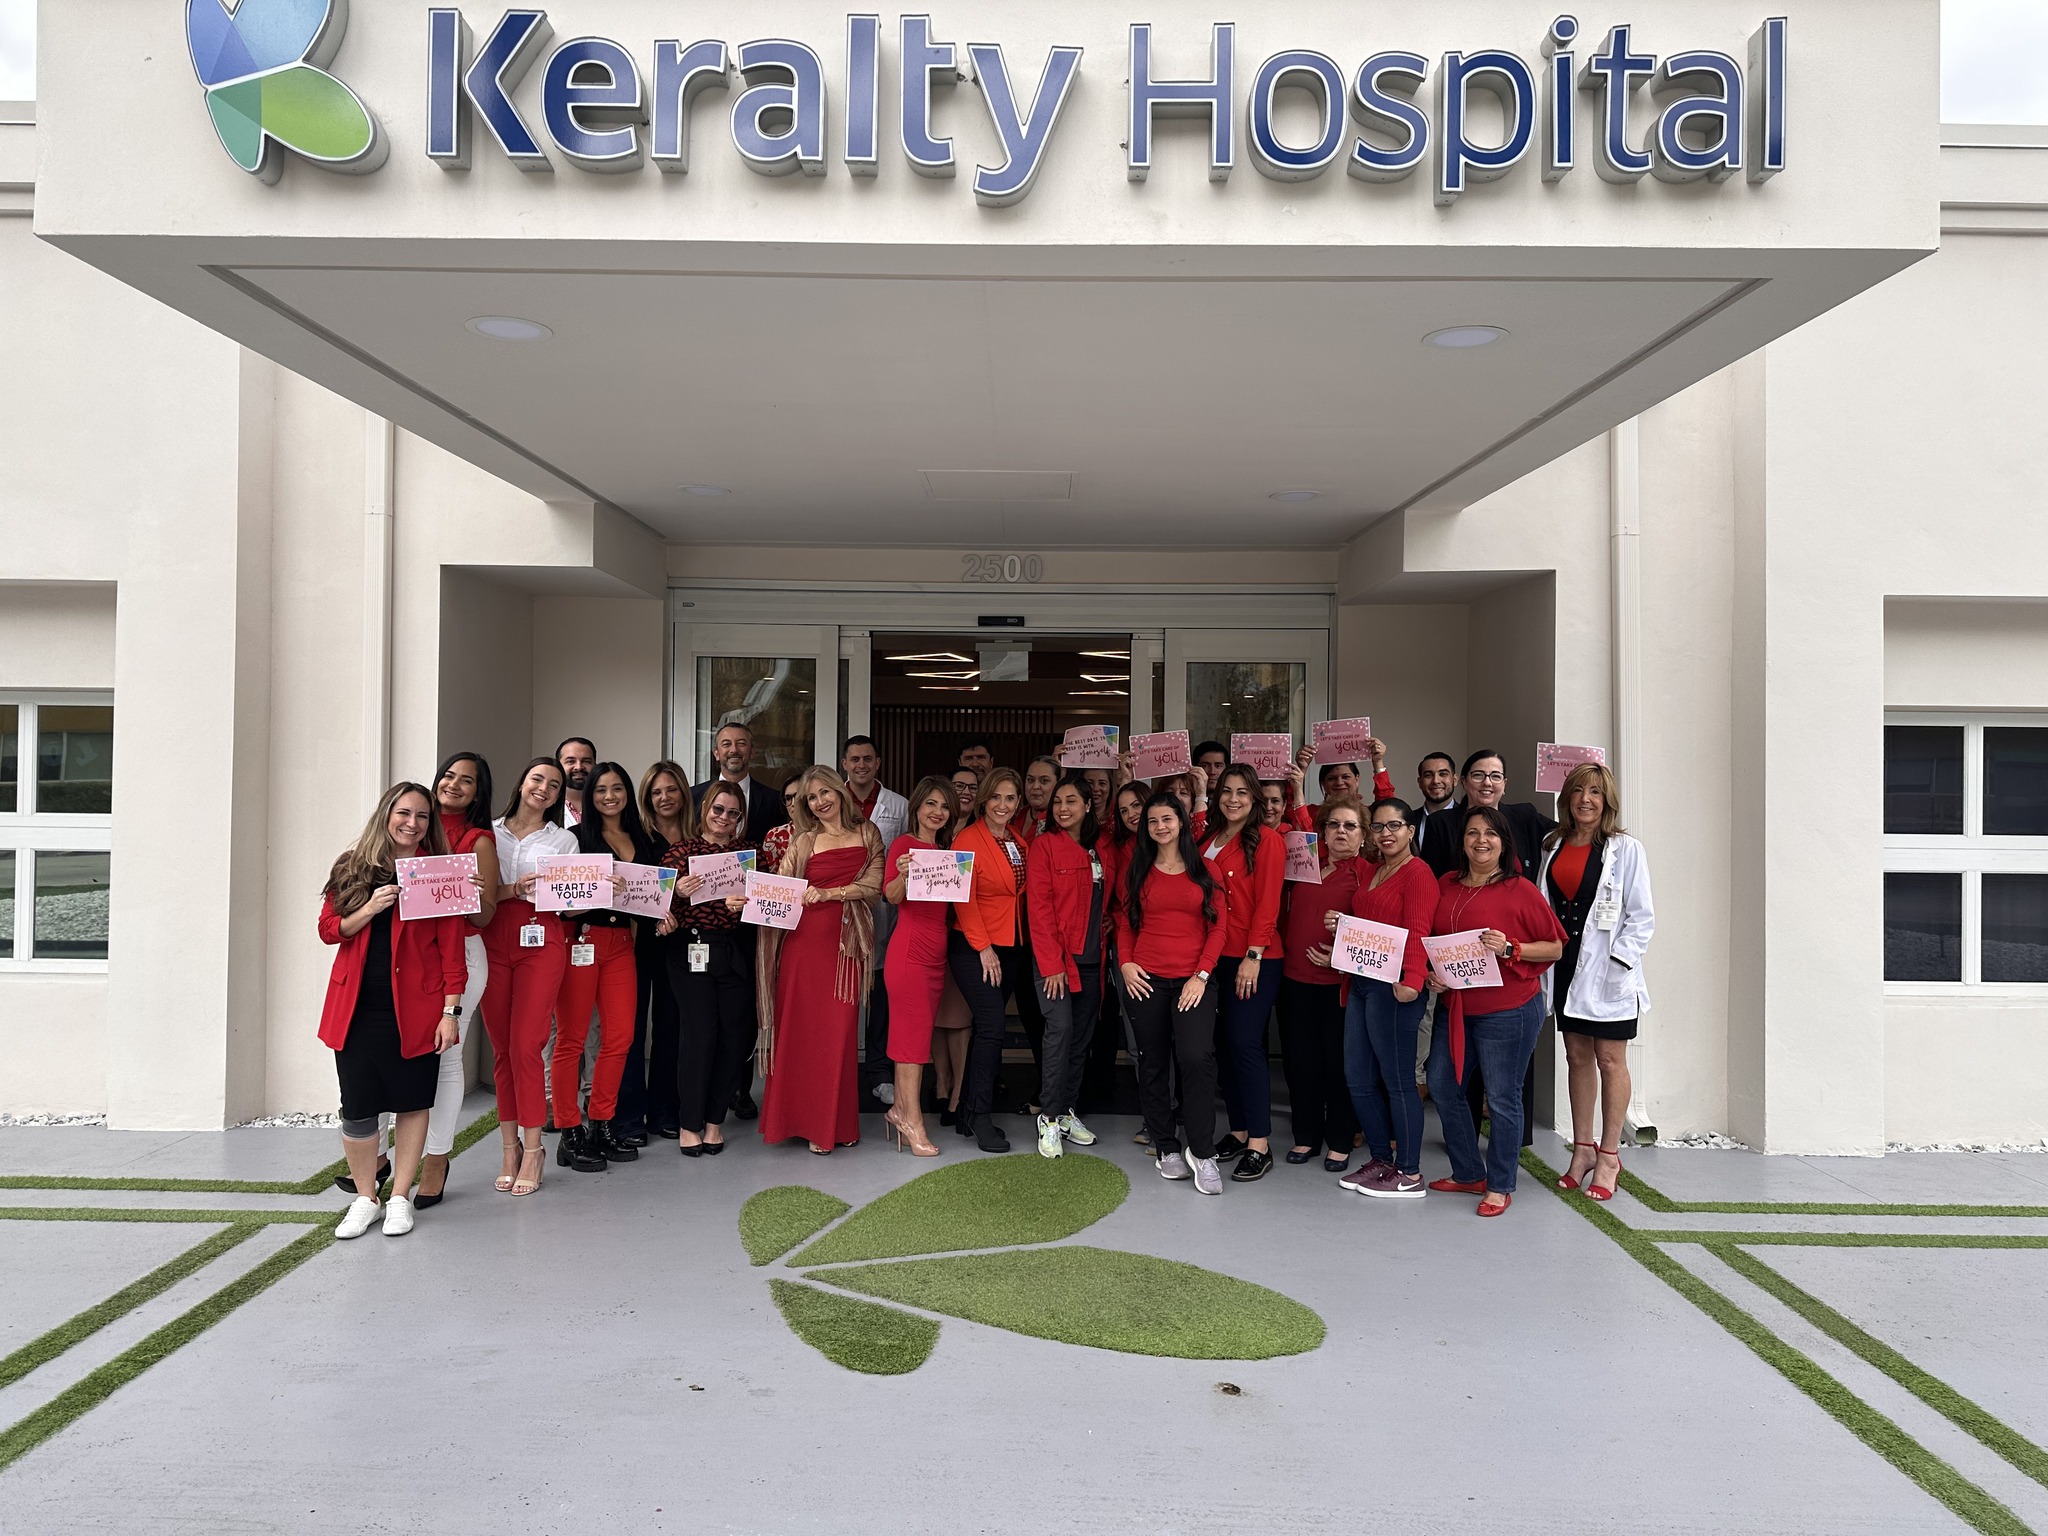 Keralty Hospital Miami - BAnner - Hospital